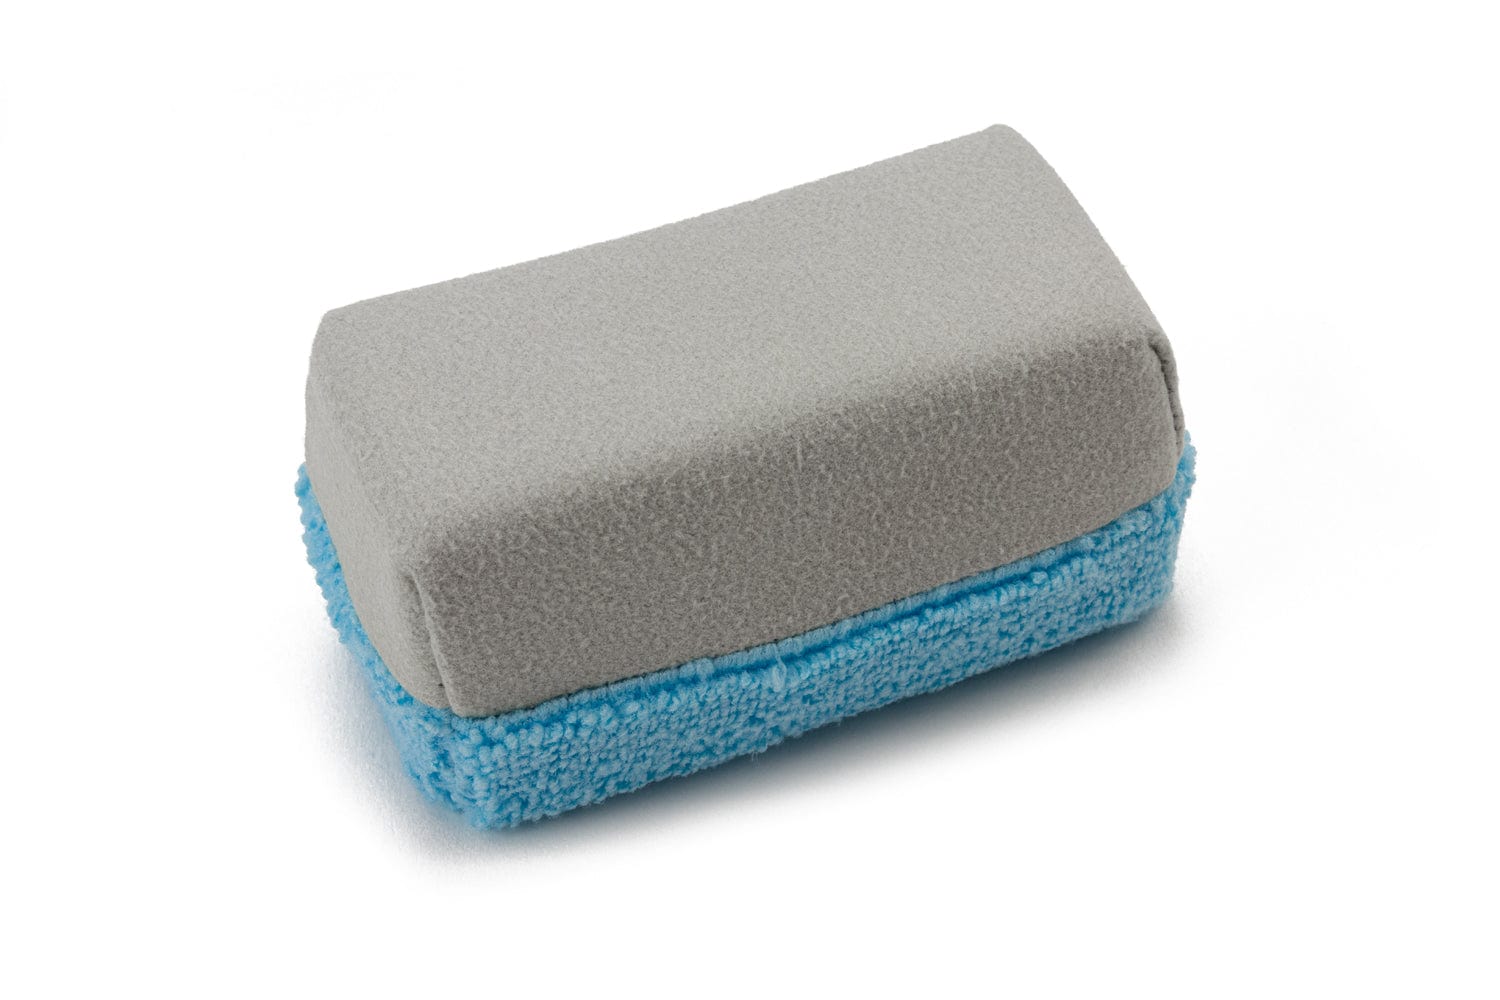 Autofiber Case Sponge Blue/Gray [Saver Applicator Half/Half] Terry/Suede Mini Microfiber Applicator Sponge 3.5"x1.5"x1.5" Blue/Gray- 12  Pack